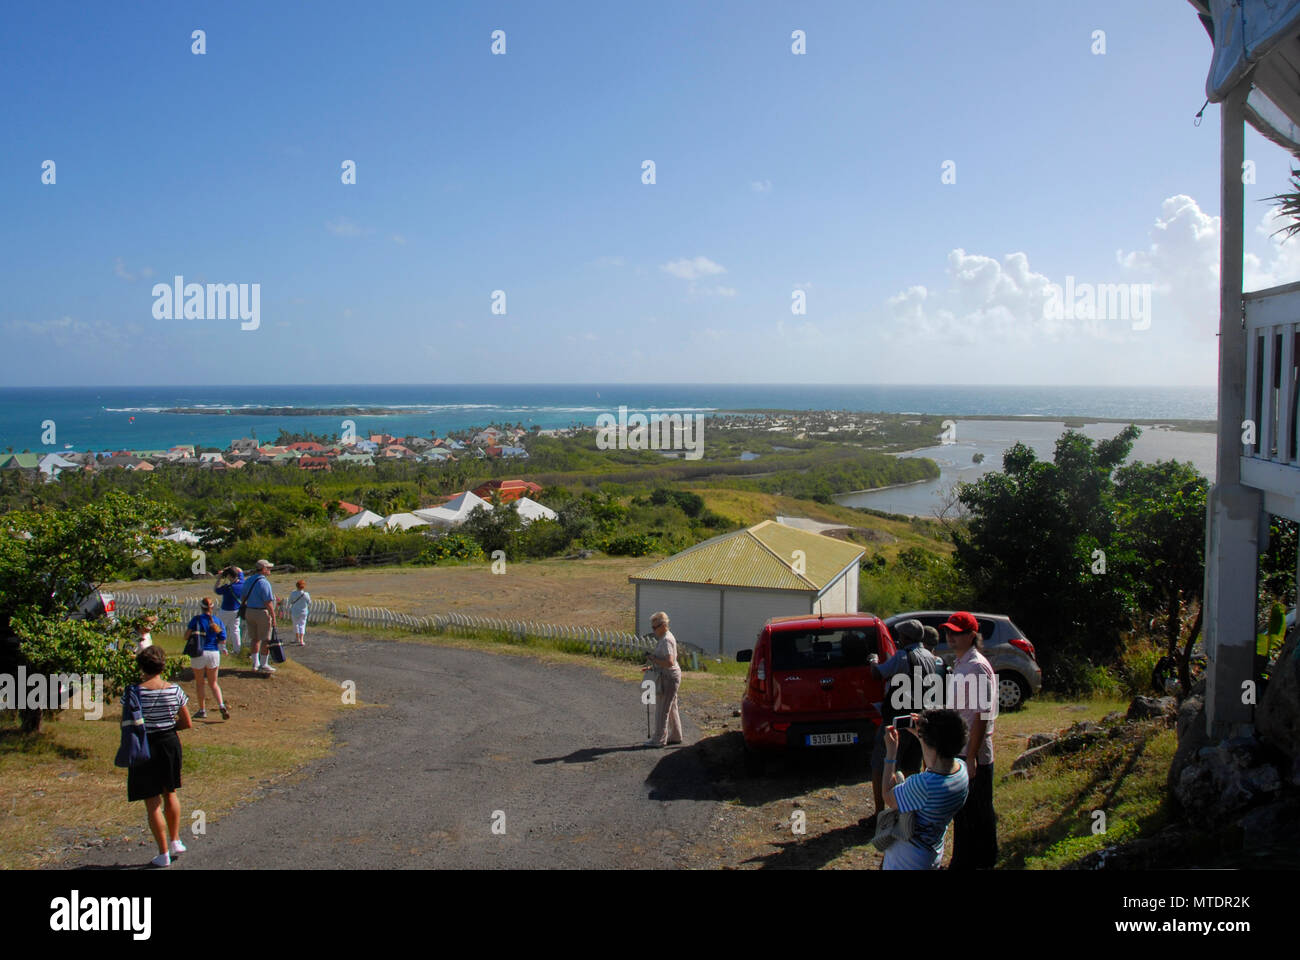 Local viewpoint overlooking the sea, St Maarten, Caribbean Stock Photo